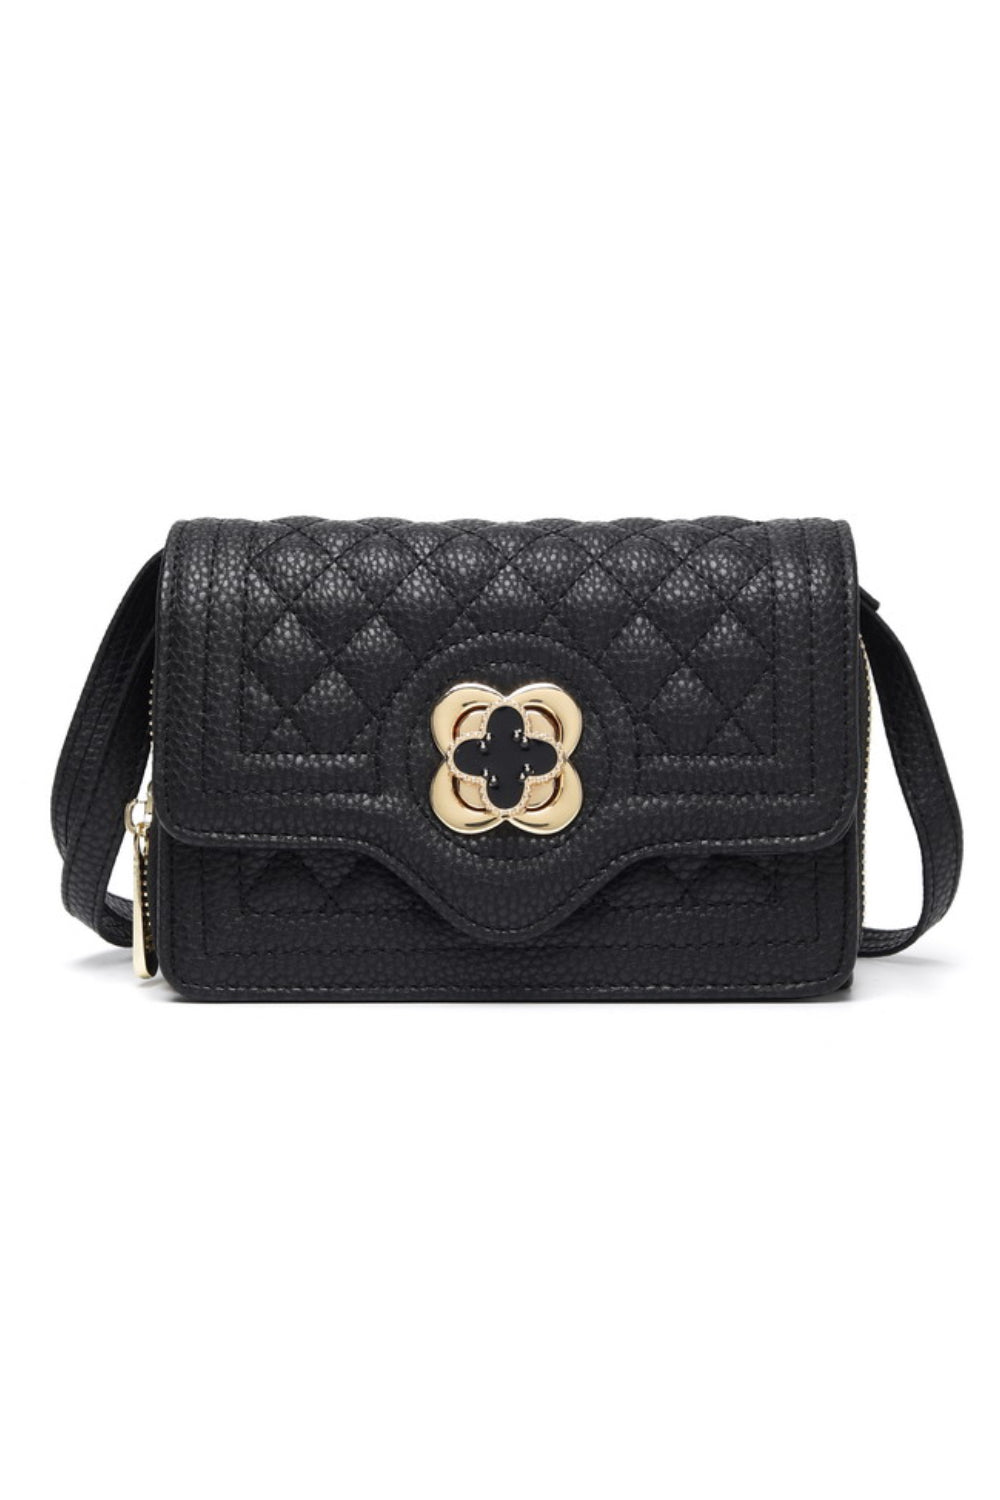 Bessie-Handbags-Cushion-Bag-Floral-Closure-black-djv-boutique-1